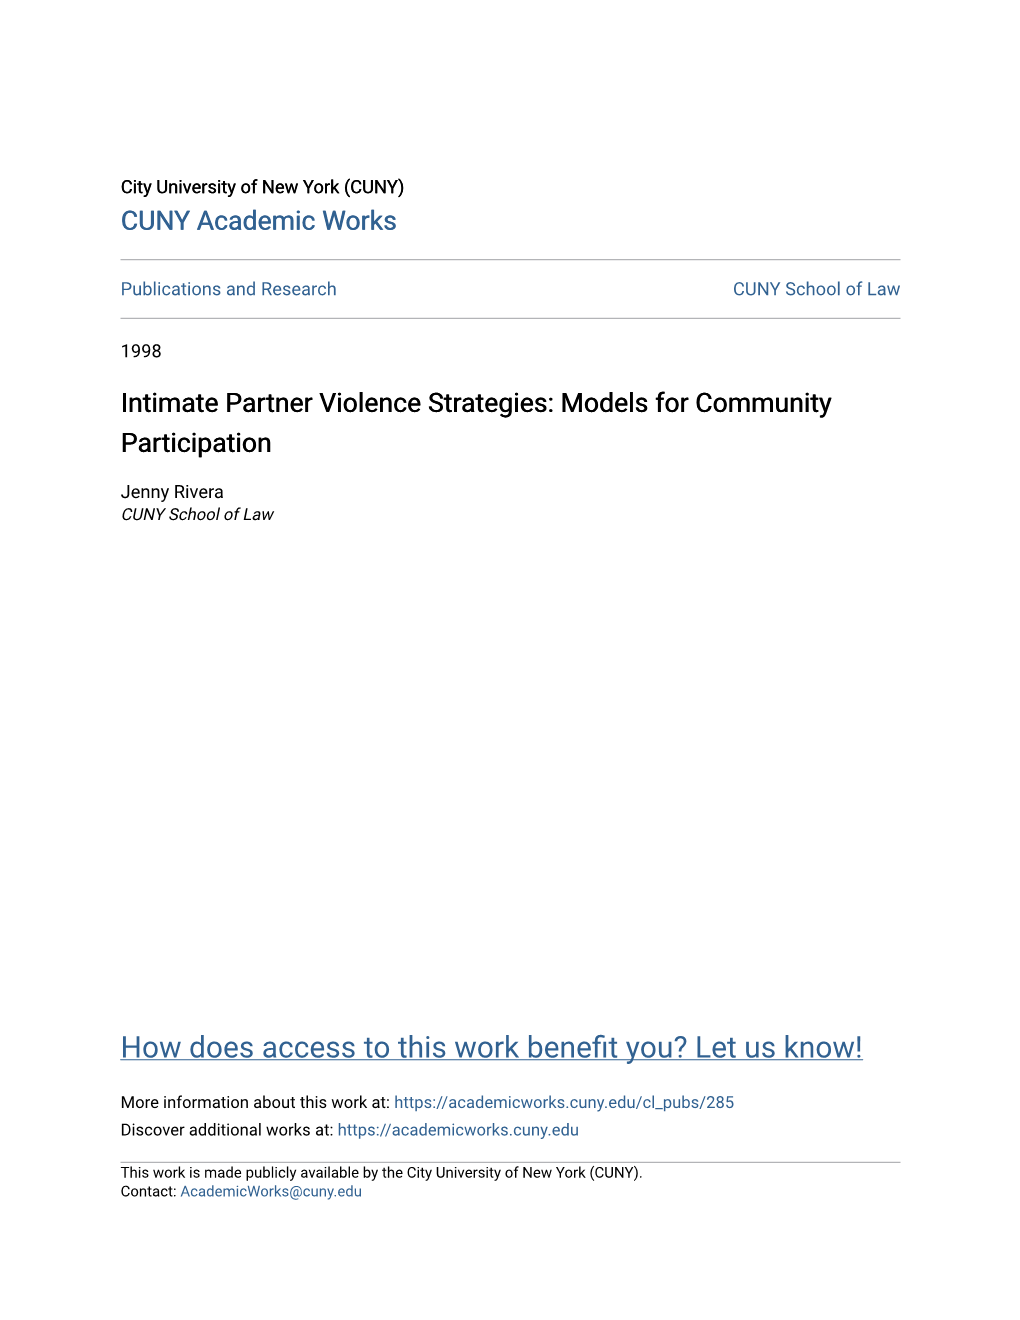 Intimate Partner Violence Strategies: Models for Community Participation